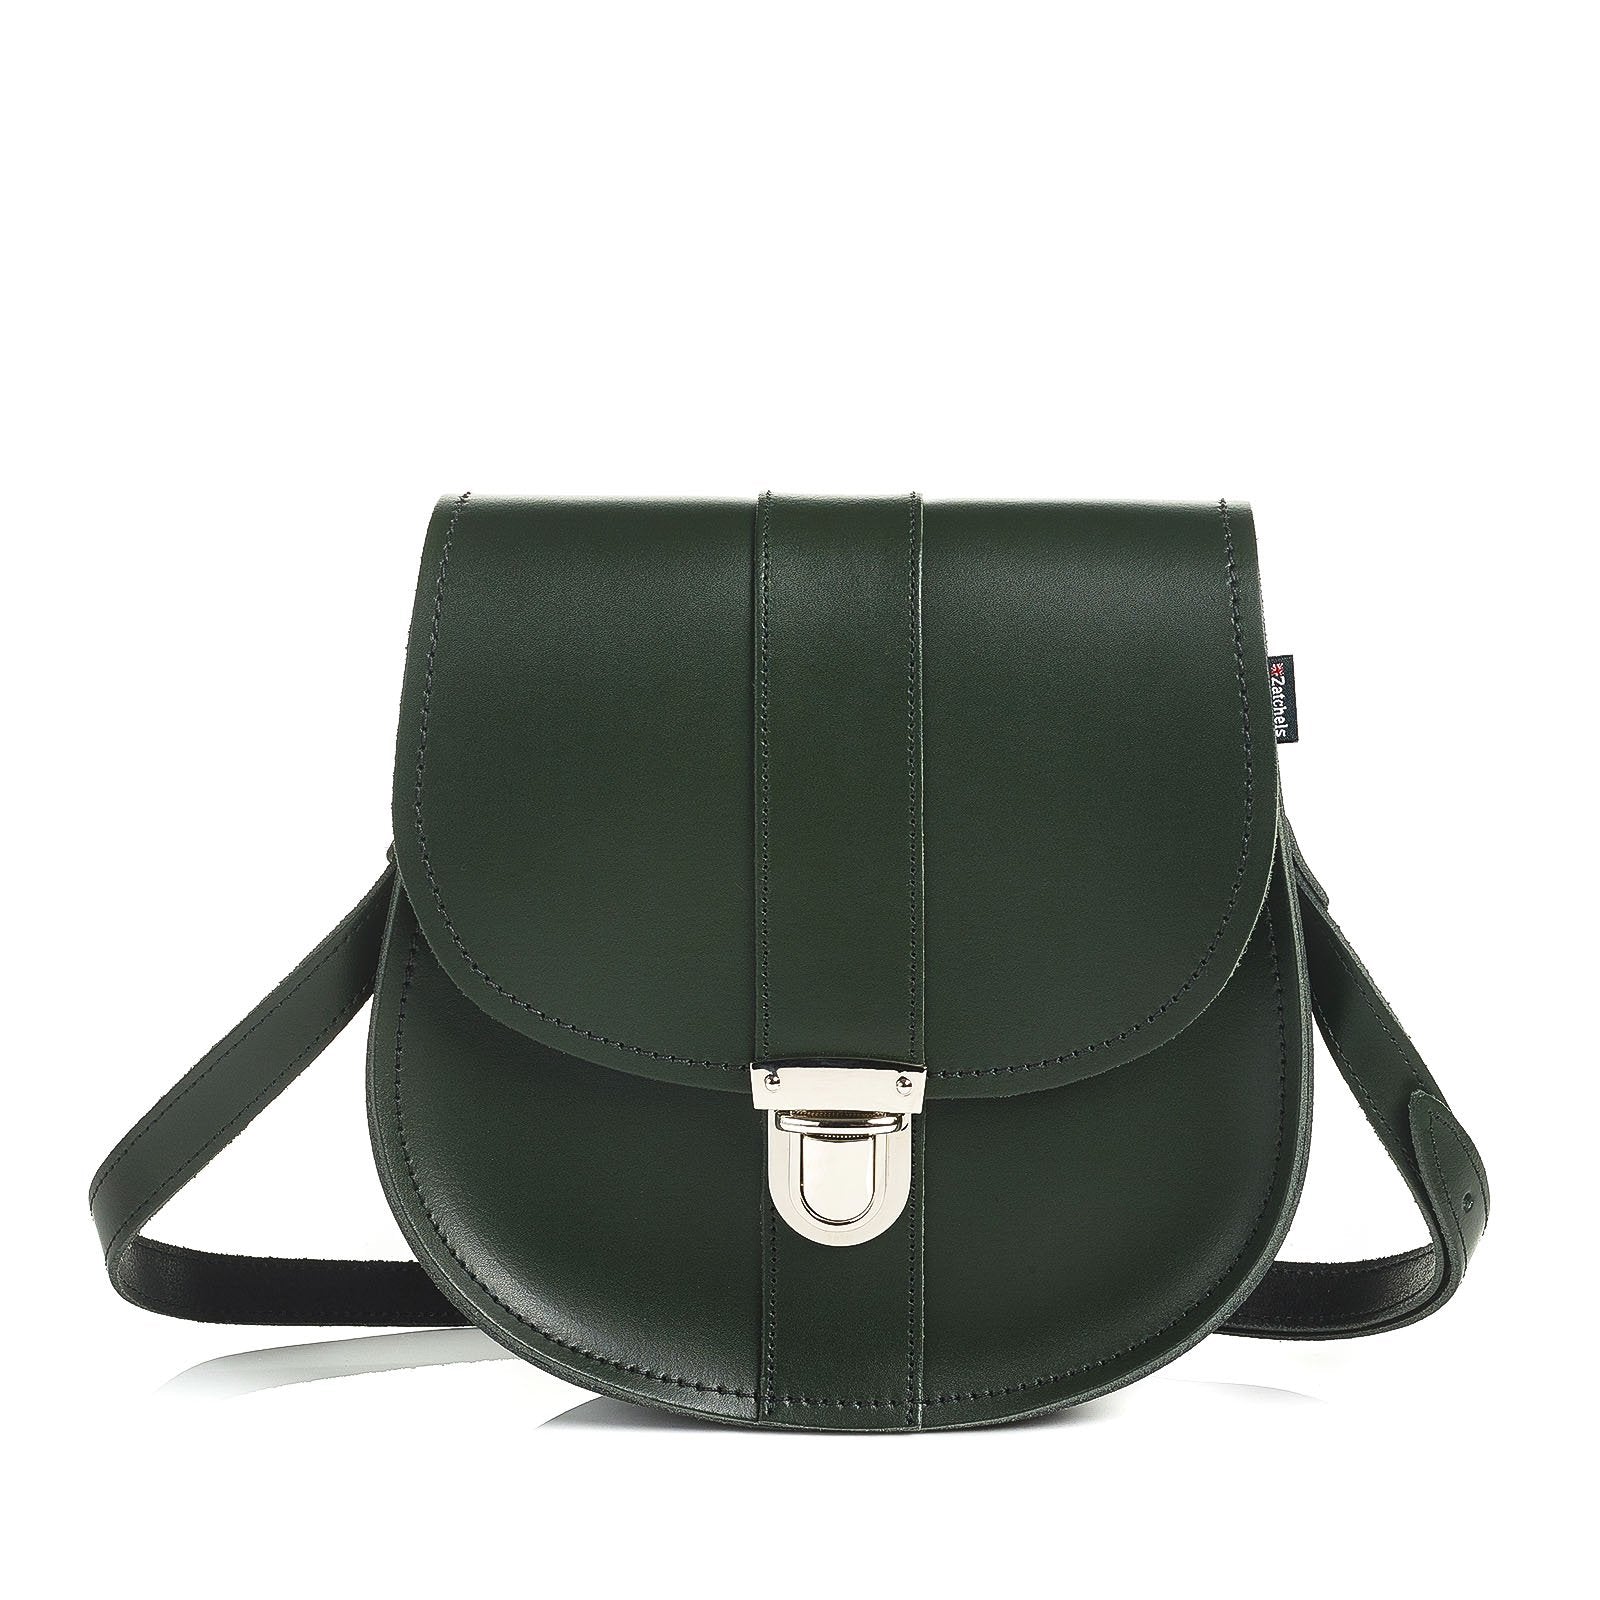 Handmade Leather Pushlock Saddle Bag - Ivy Green